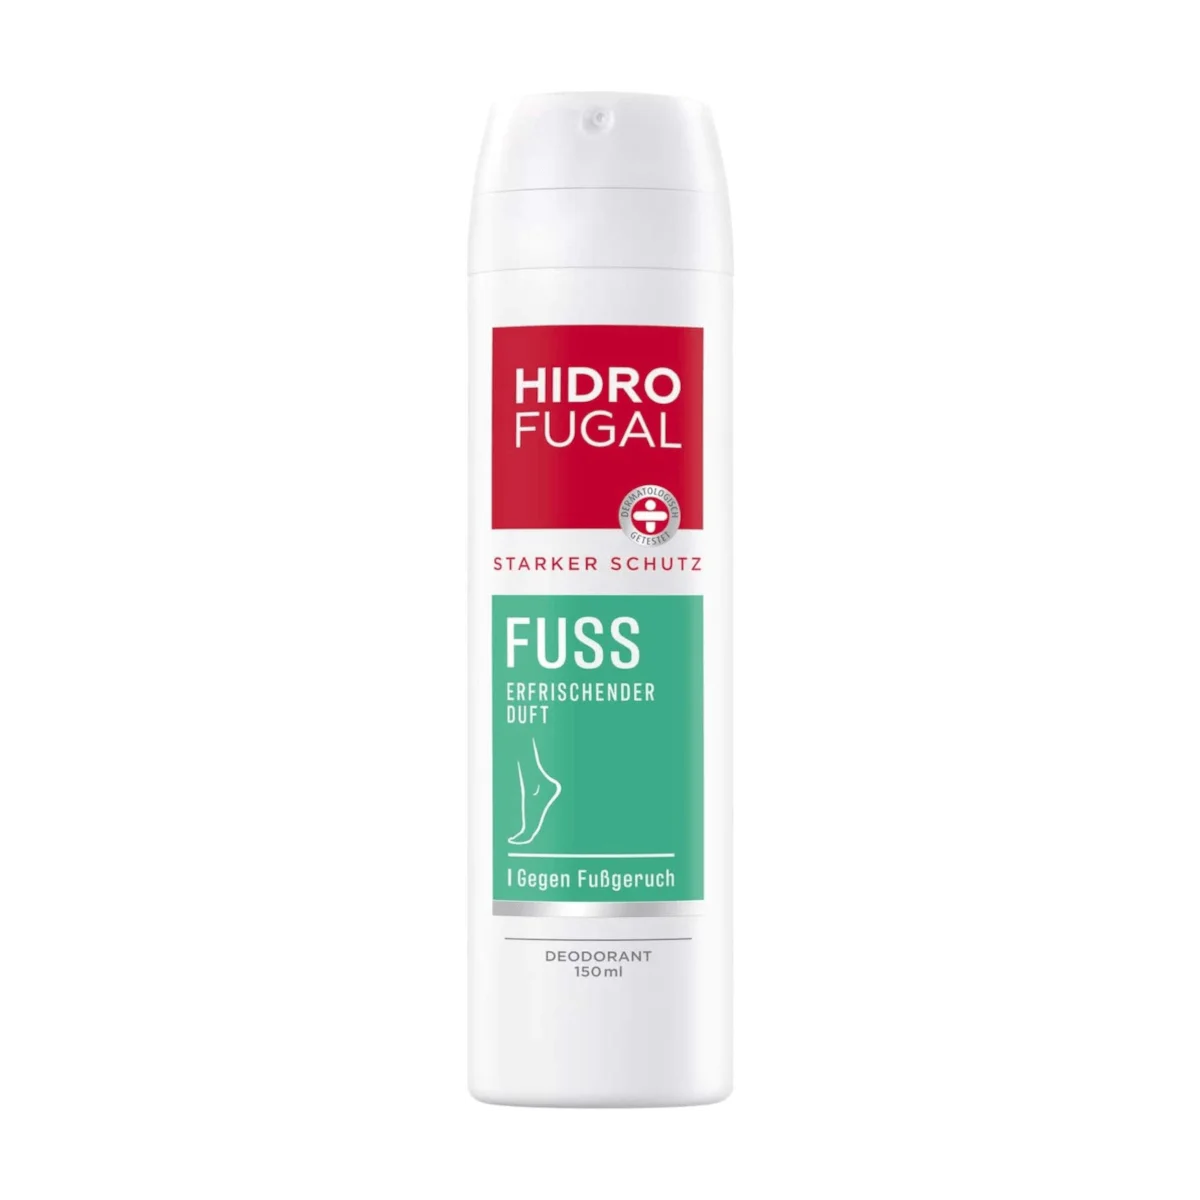 Hidrofugal Deodorant Fuss Spray, 150 ml